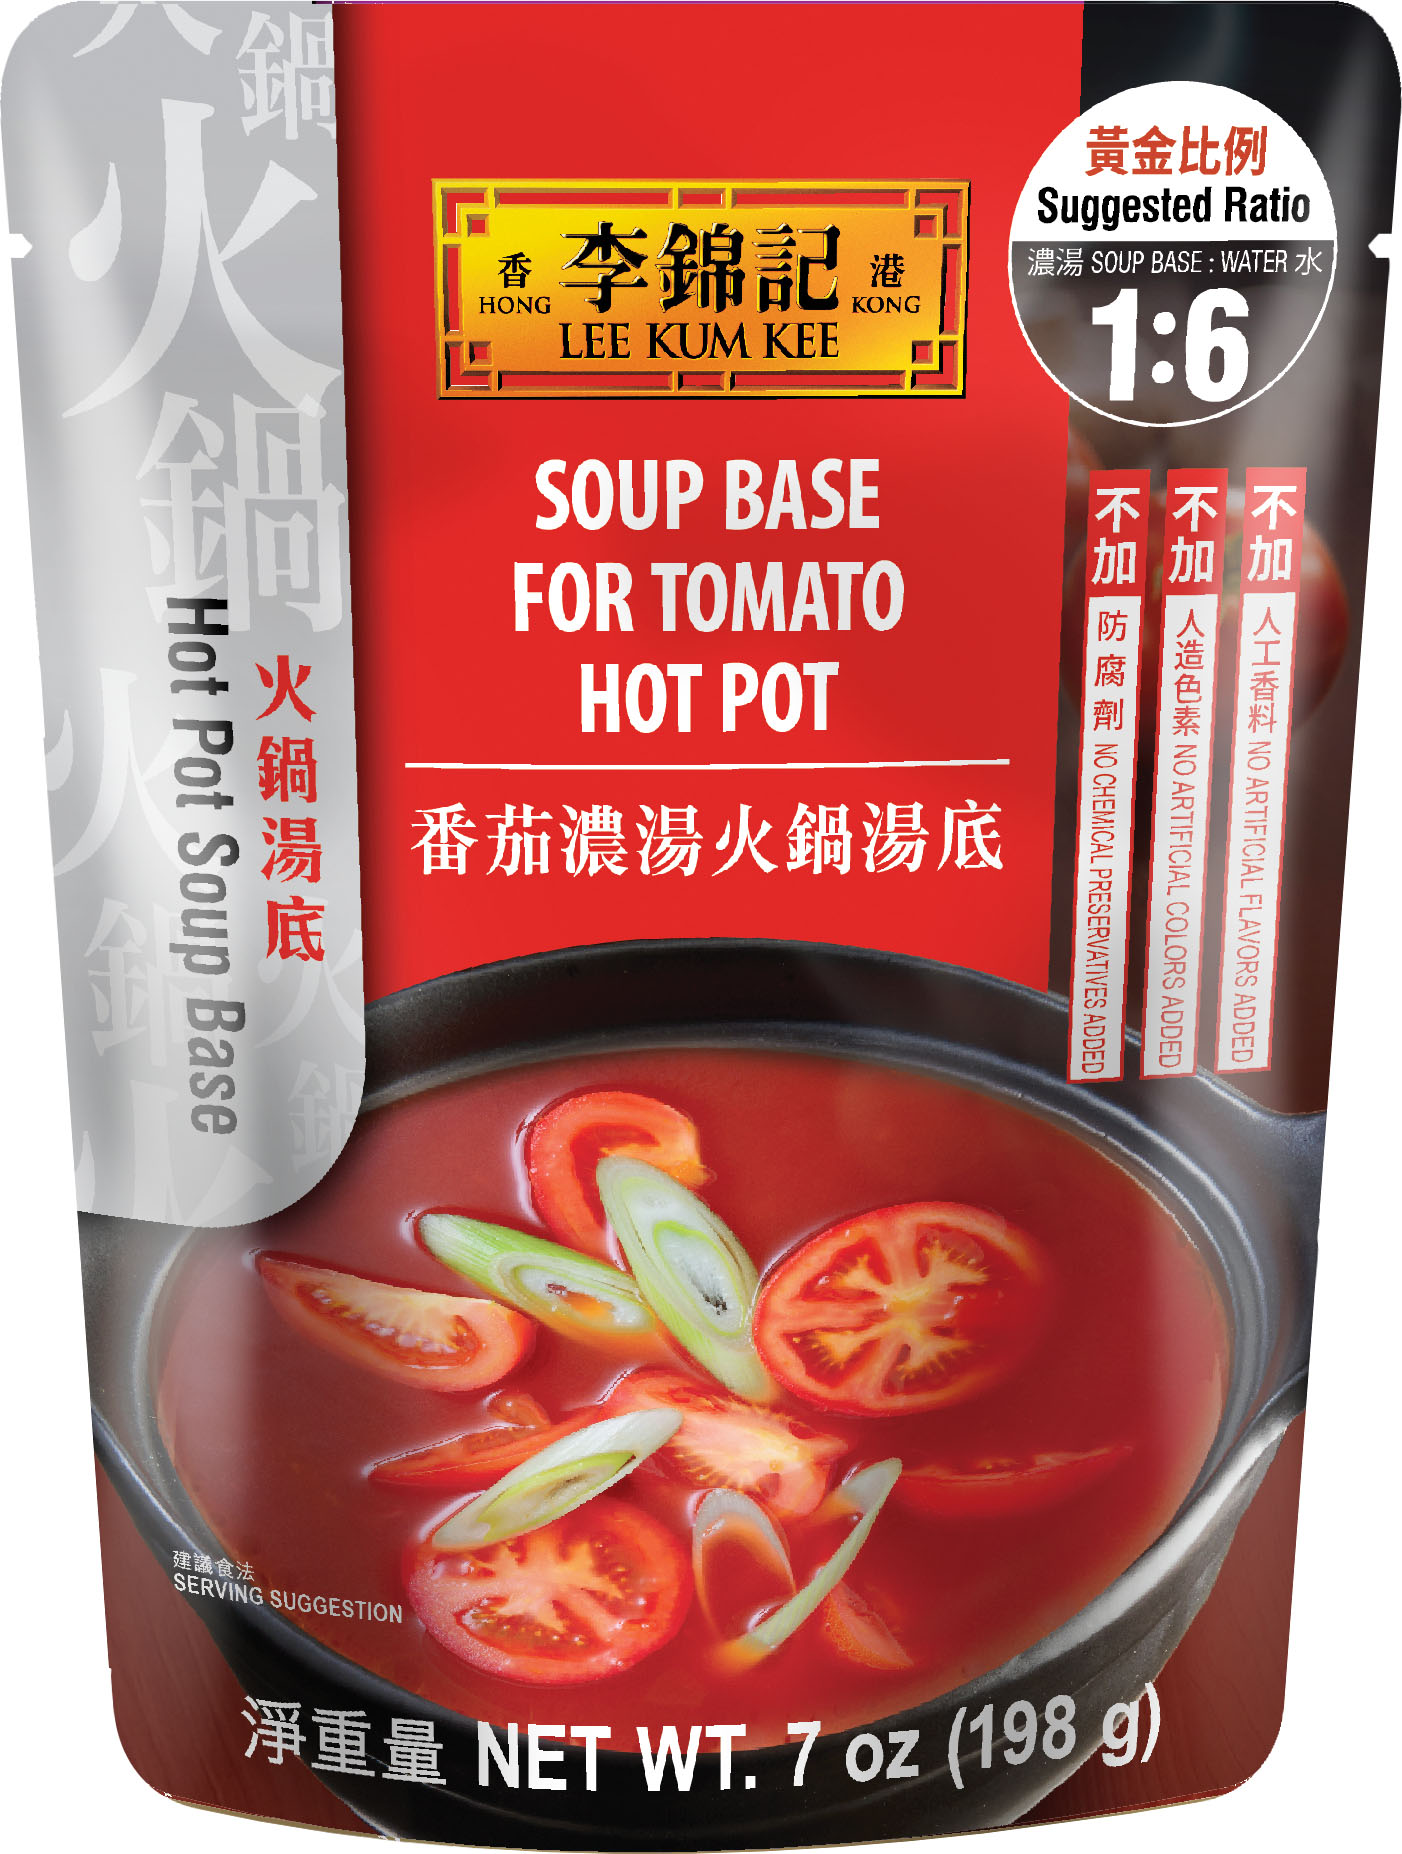 Soup Base for Tomato Hot Pot 7 oz. (198 g)